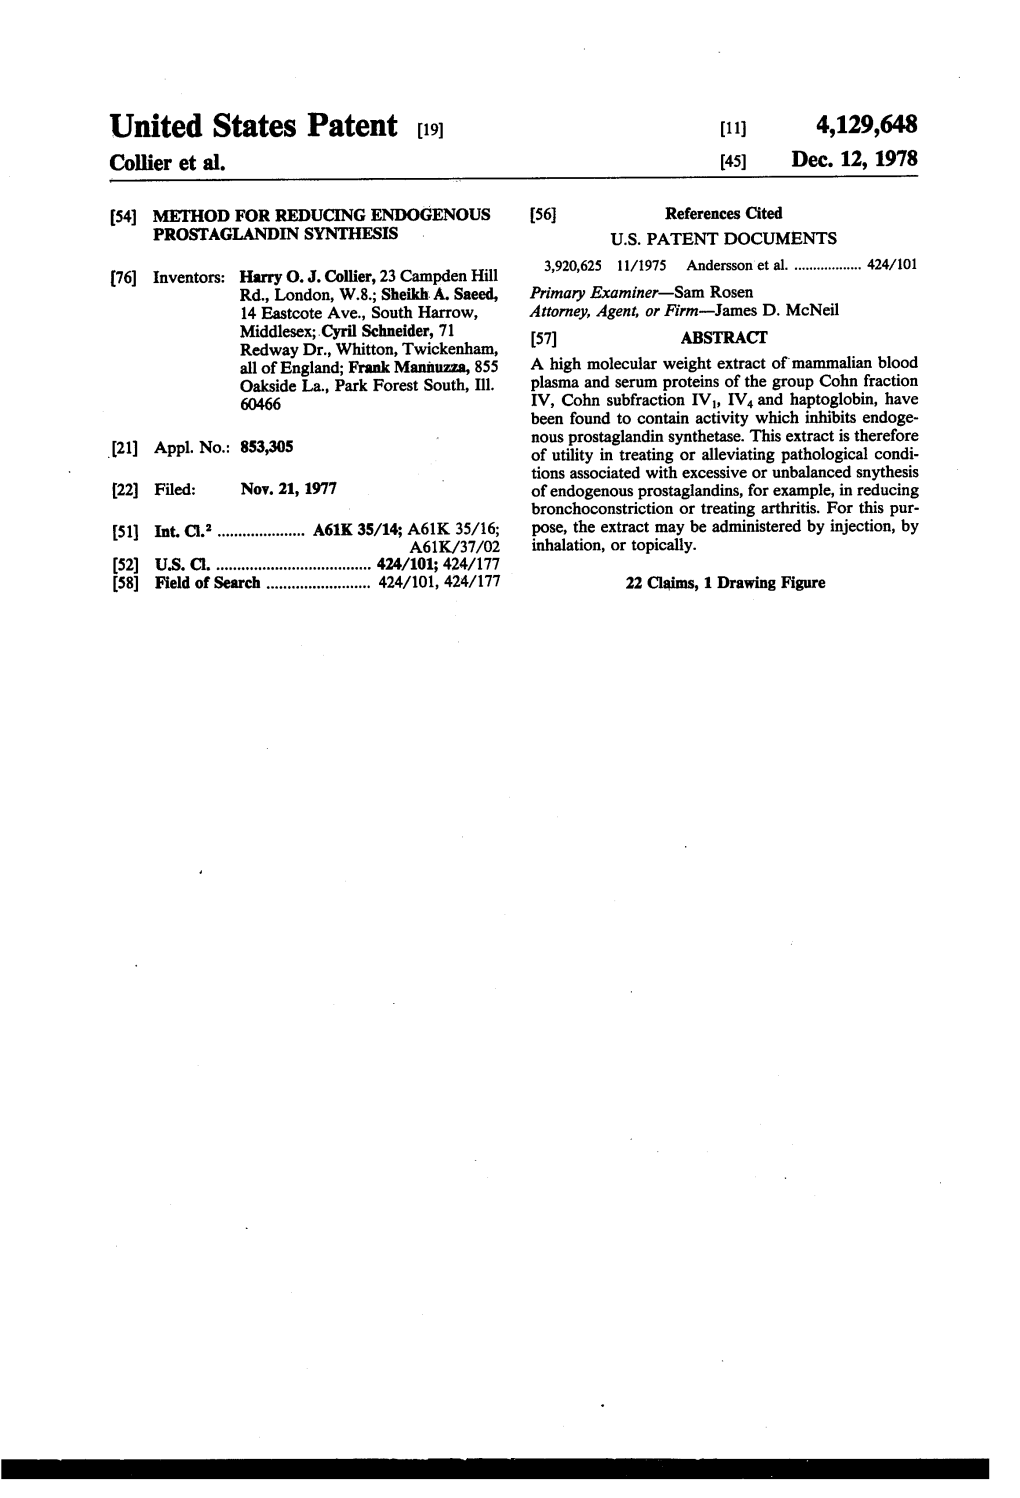 United States Patent (19) (11) 4,129,648 Collier Et Al